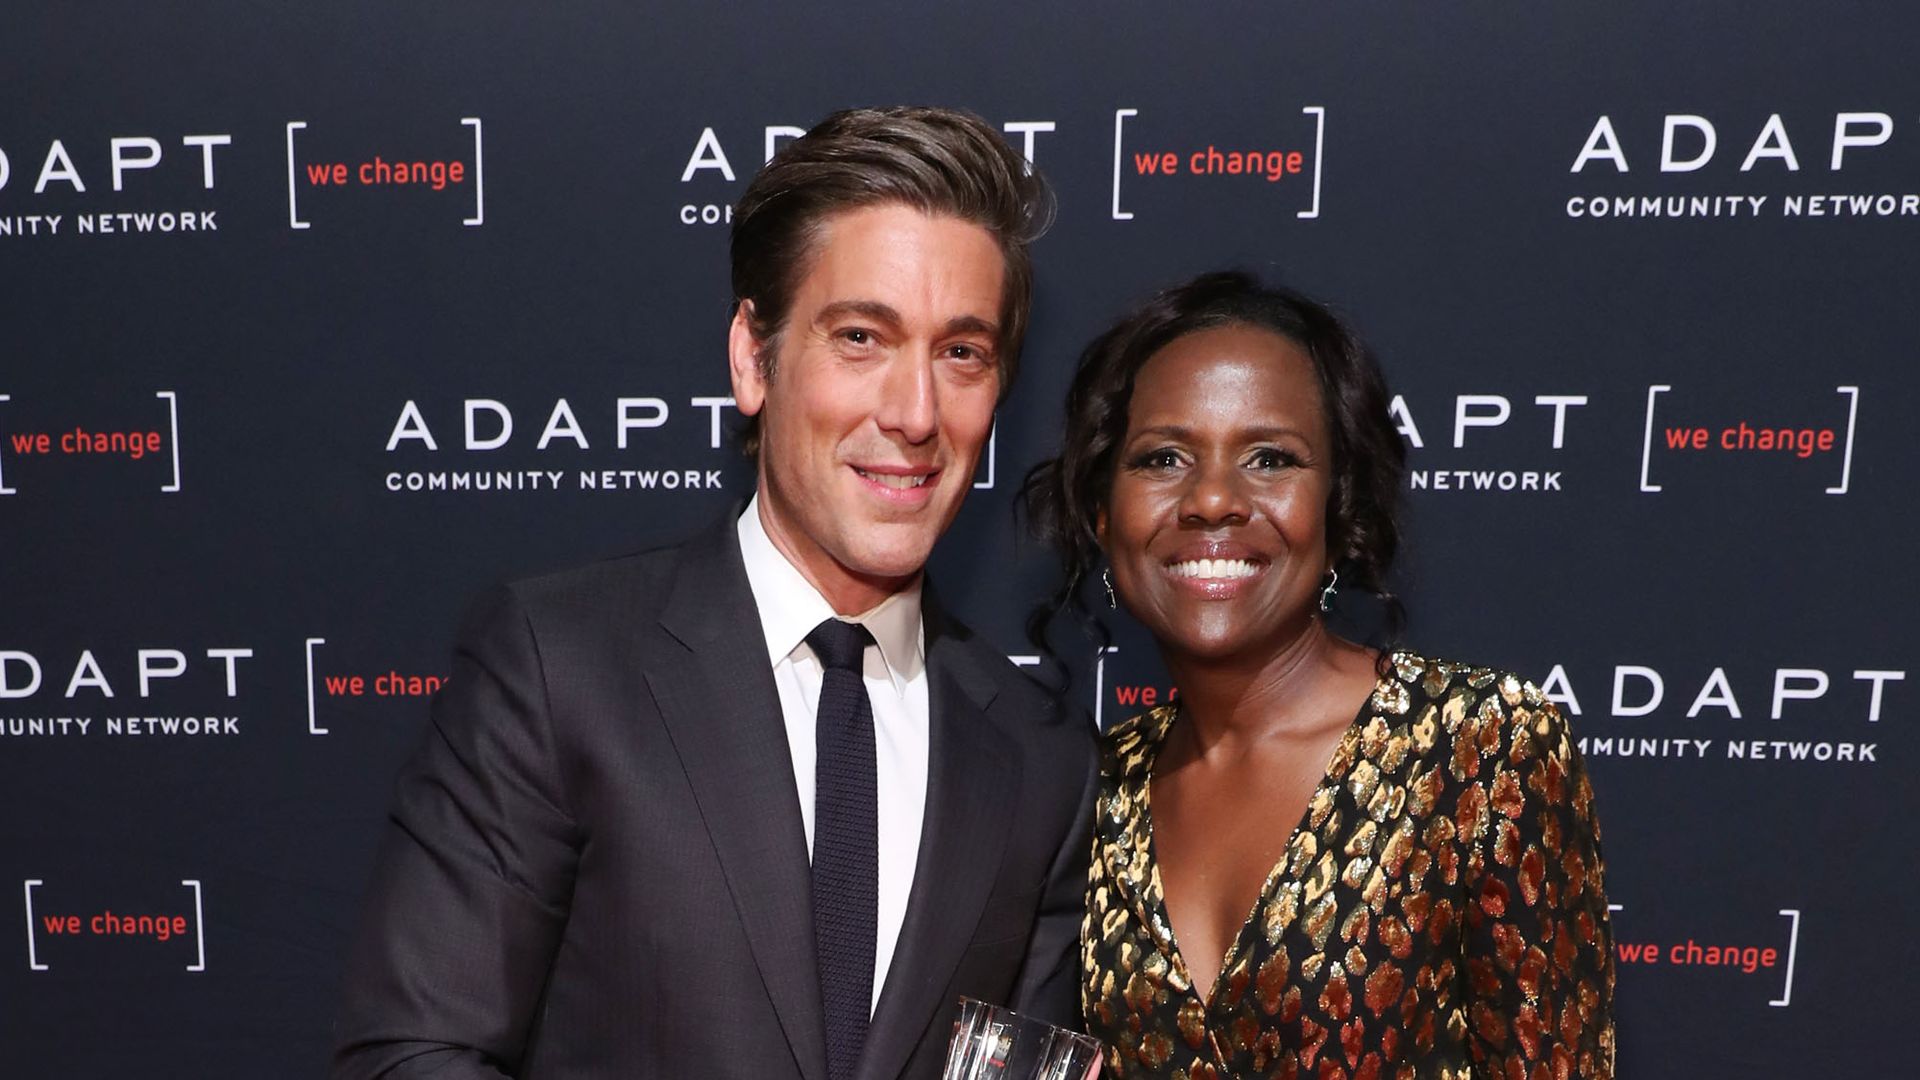 2019 ADAPT Leadership Award honoree David Muir and Deborah Roberts pose during the 2019 2nd Annual ADAPT Leadership Awards at Cipriani 42nd Street on March 14, 2019 in New York City.